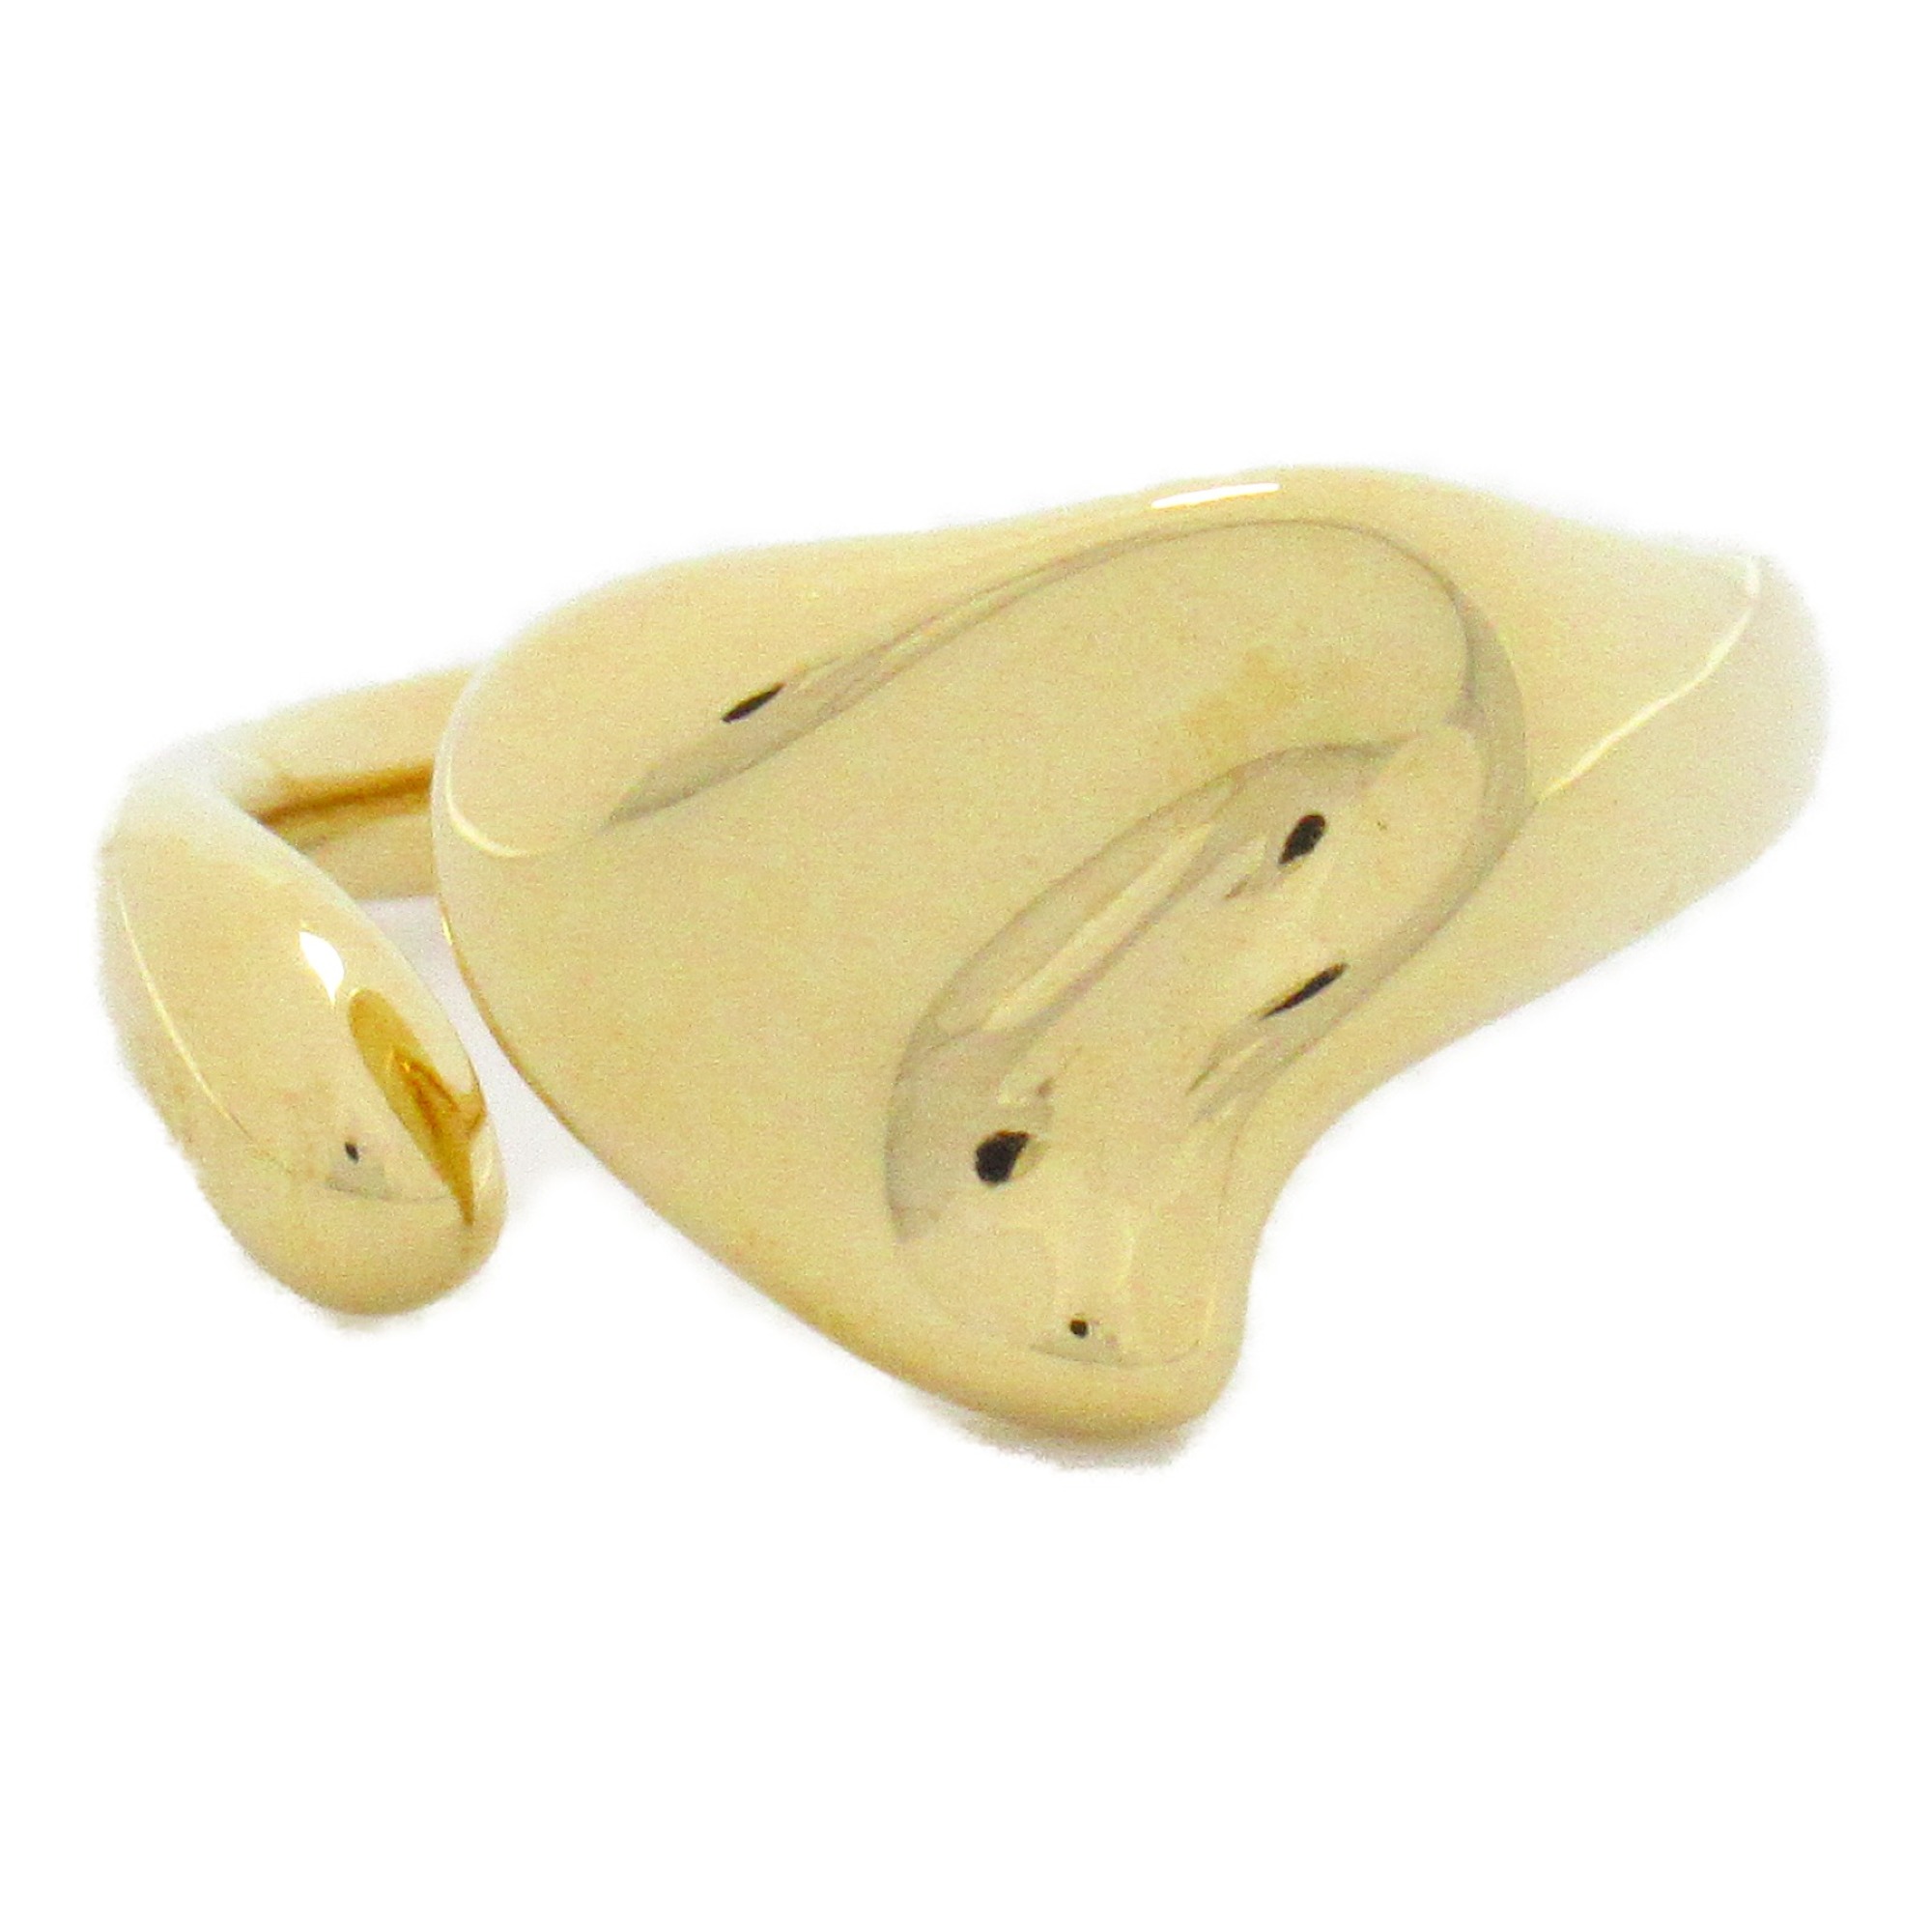 TIFFANY&CO full heart ring Ring Gold  K18 (Yellow Gold) Gold